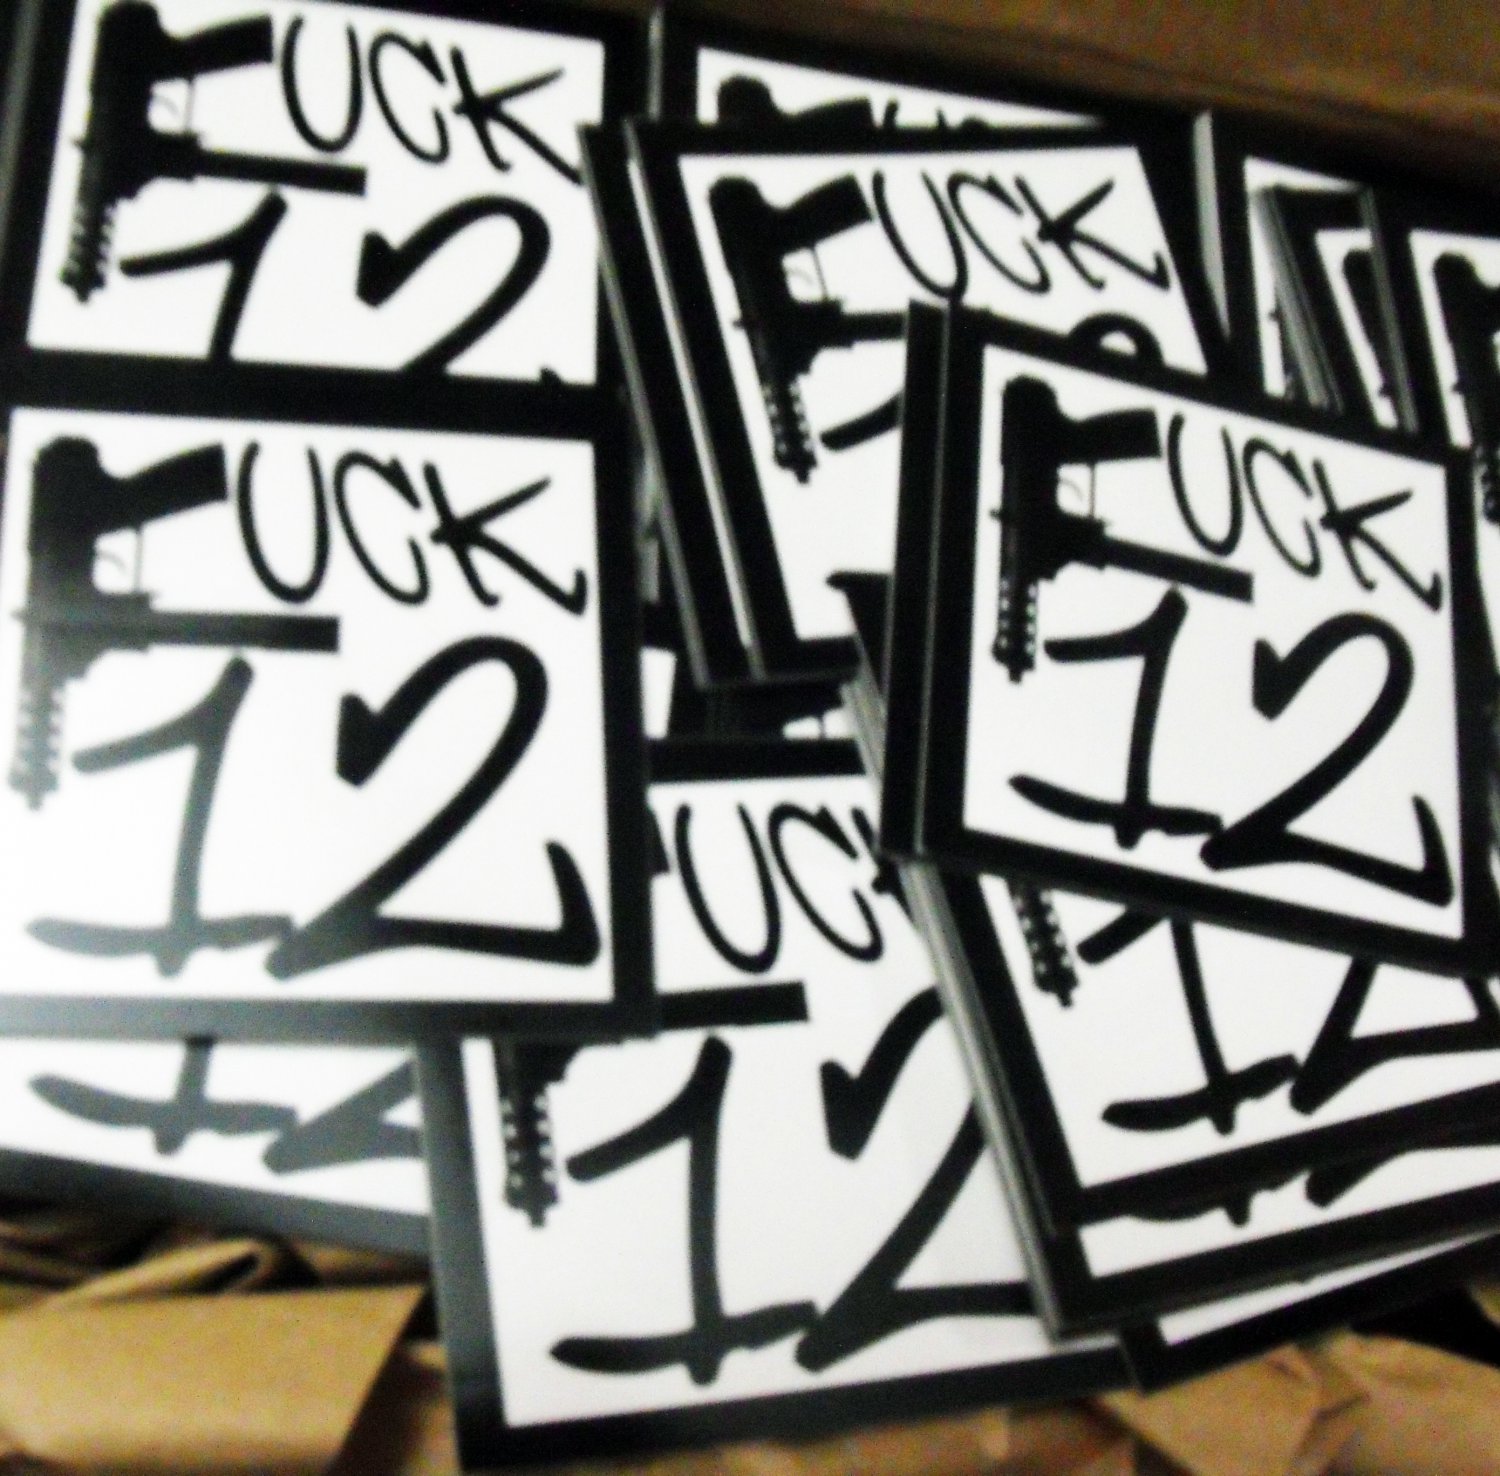 100 FUCK 12 2.5" x 2.5" stickers